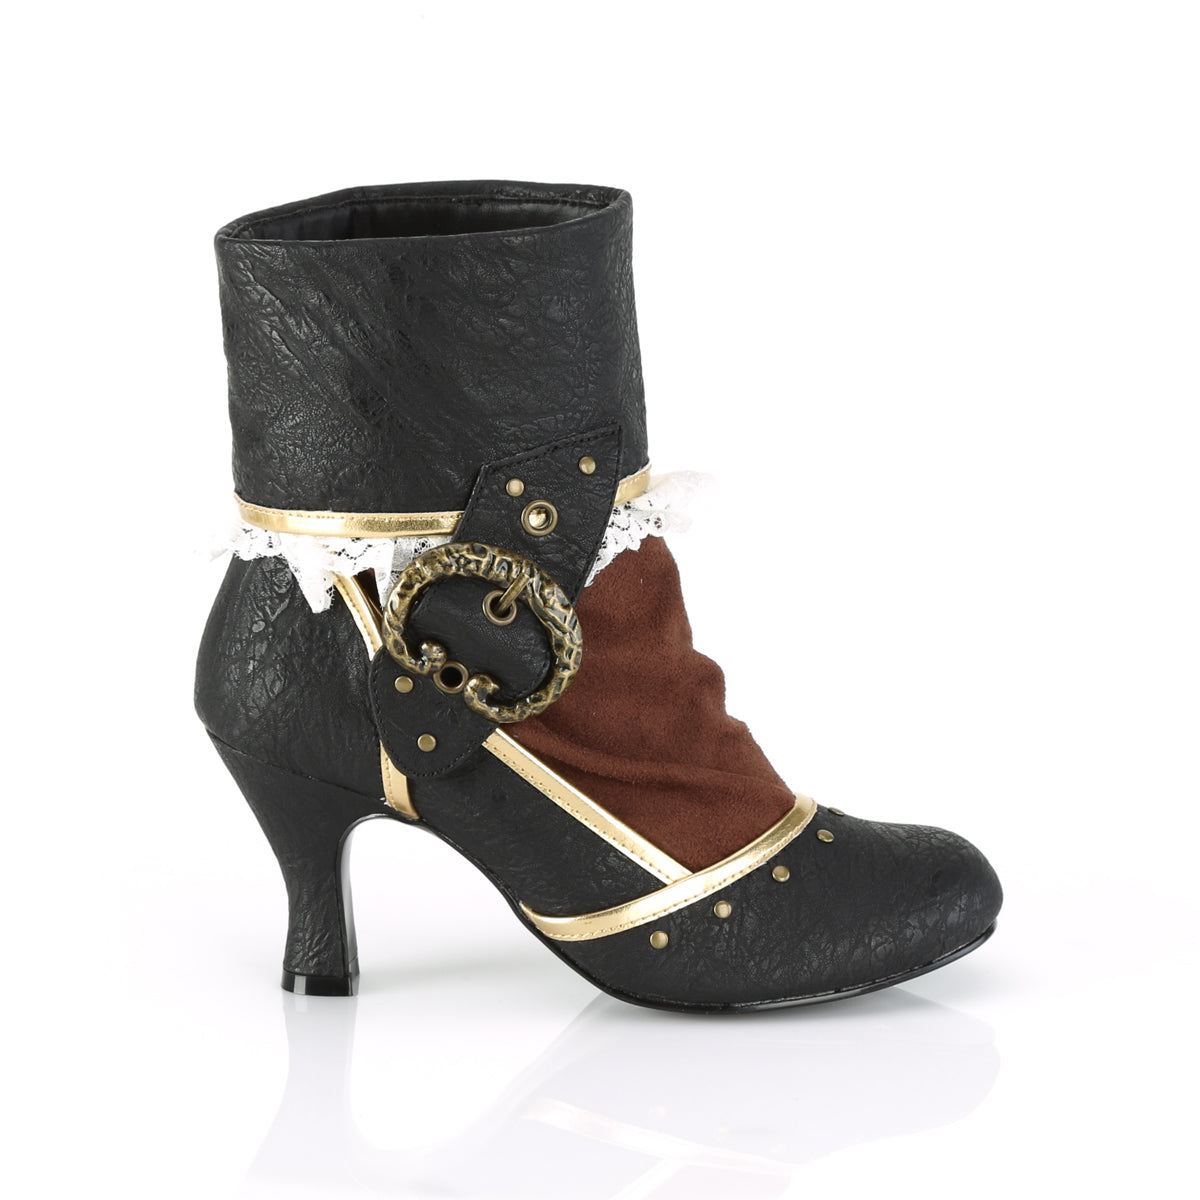 MATEY-115 3 Inch Heel Black Women's Boots Funtasma Costume Shoes Fancy Dress